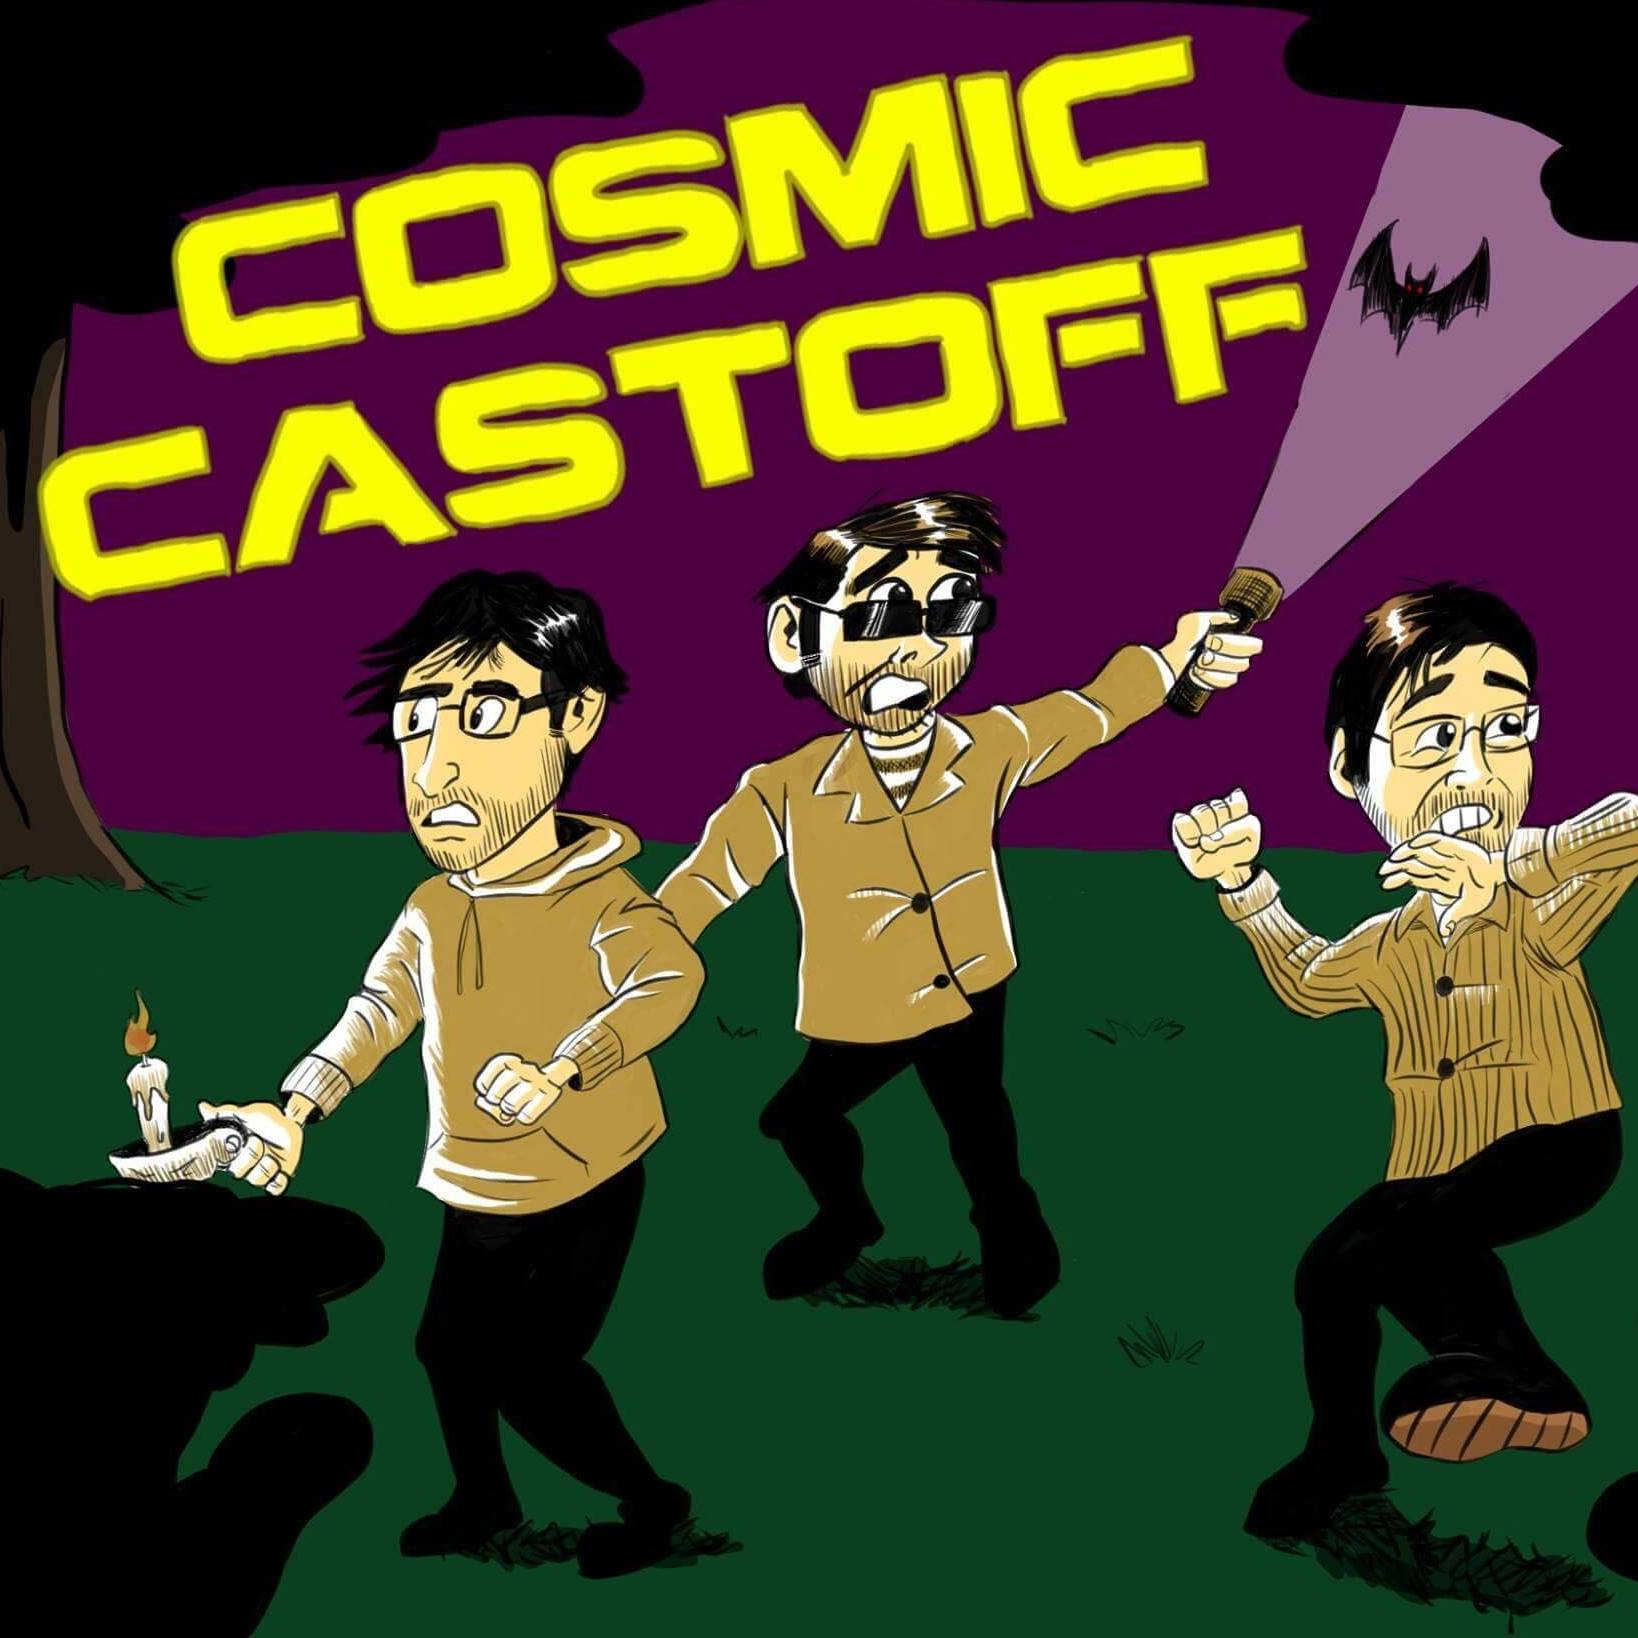 Cosmic Castoff: Cosmic Clown-Off!